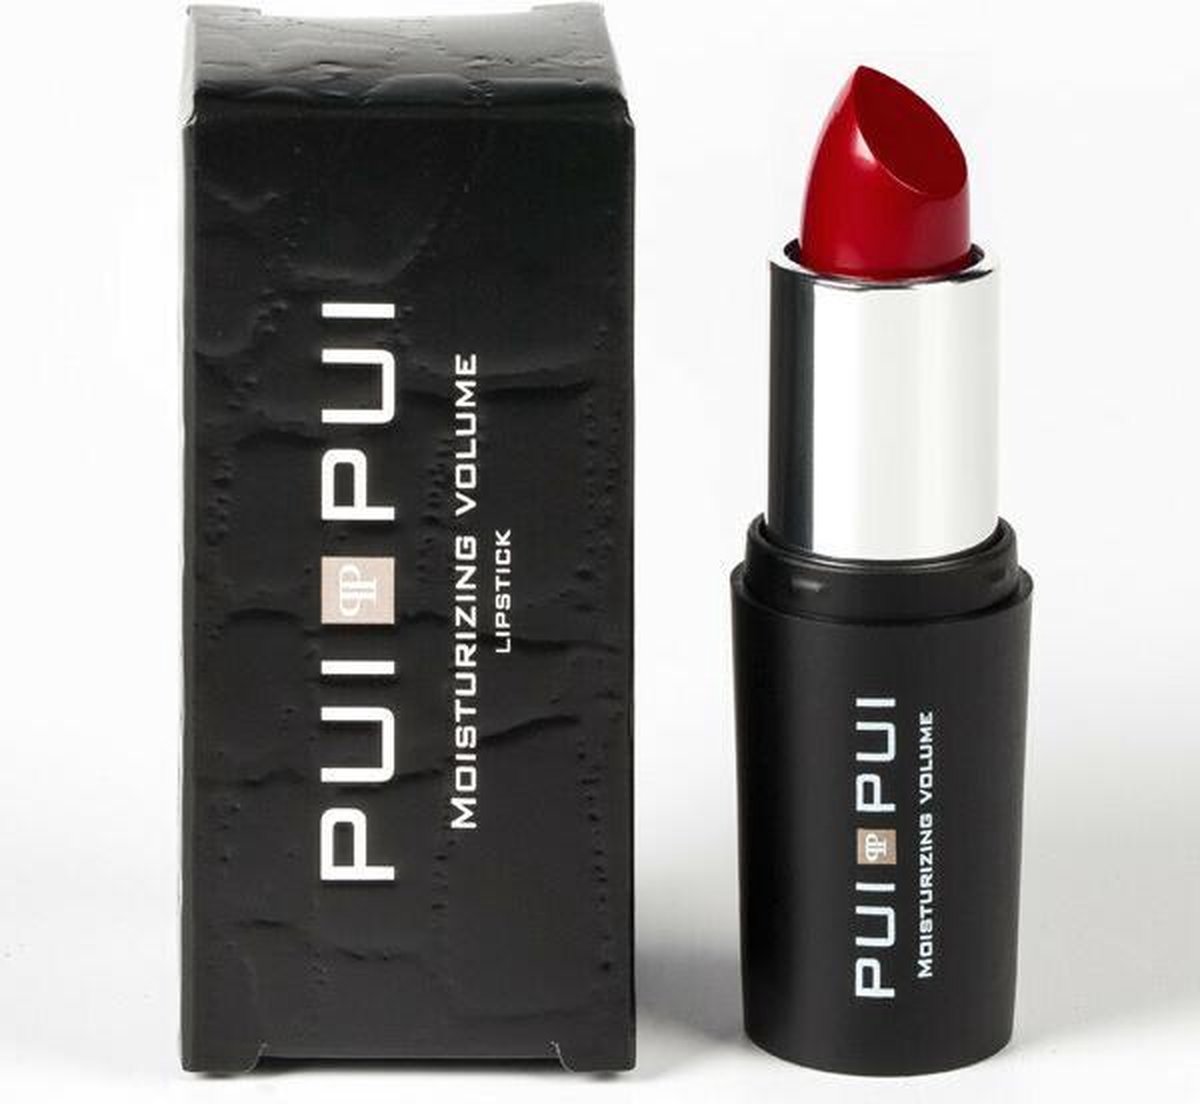 Pui Pui Moisturizing Volume Lipstick, cherry red